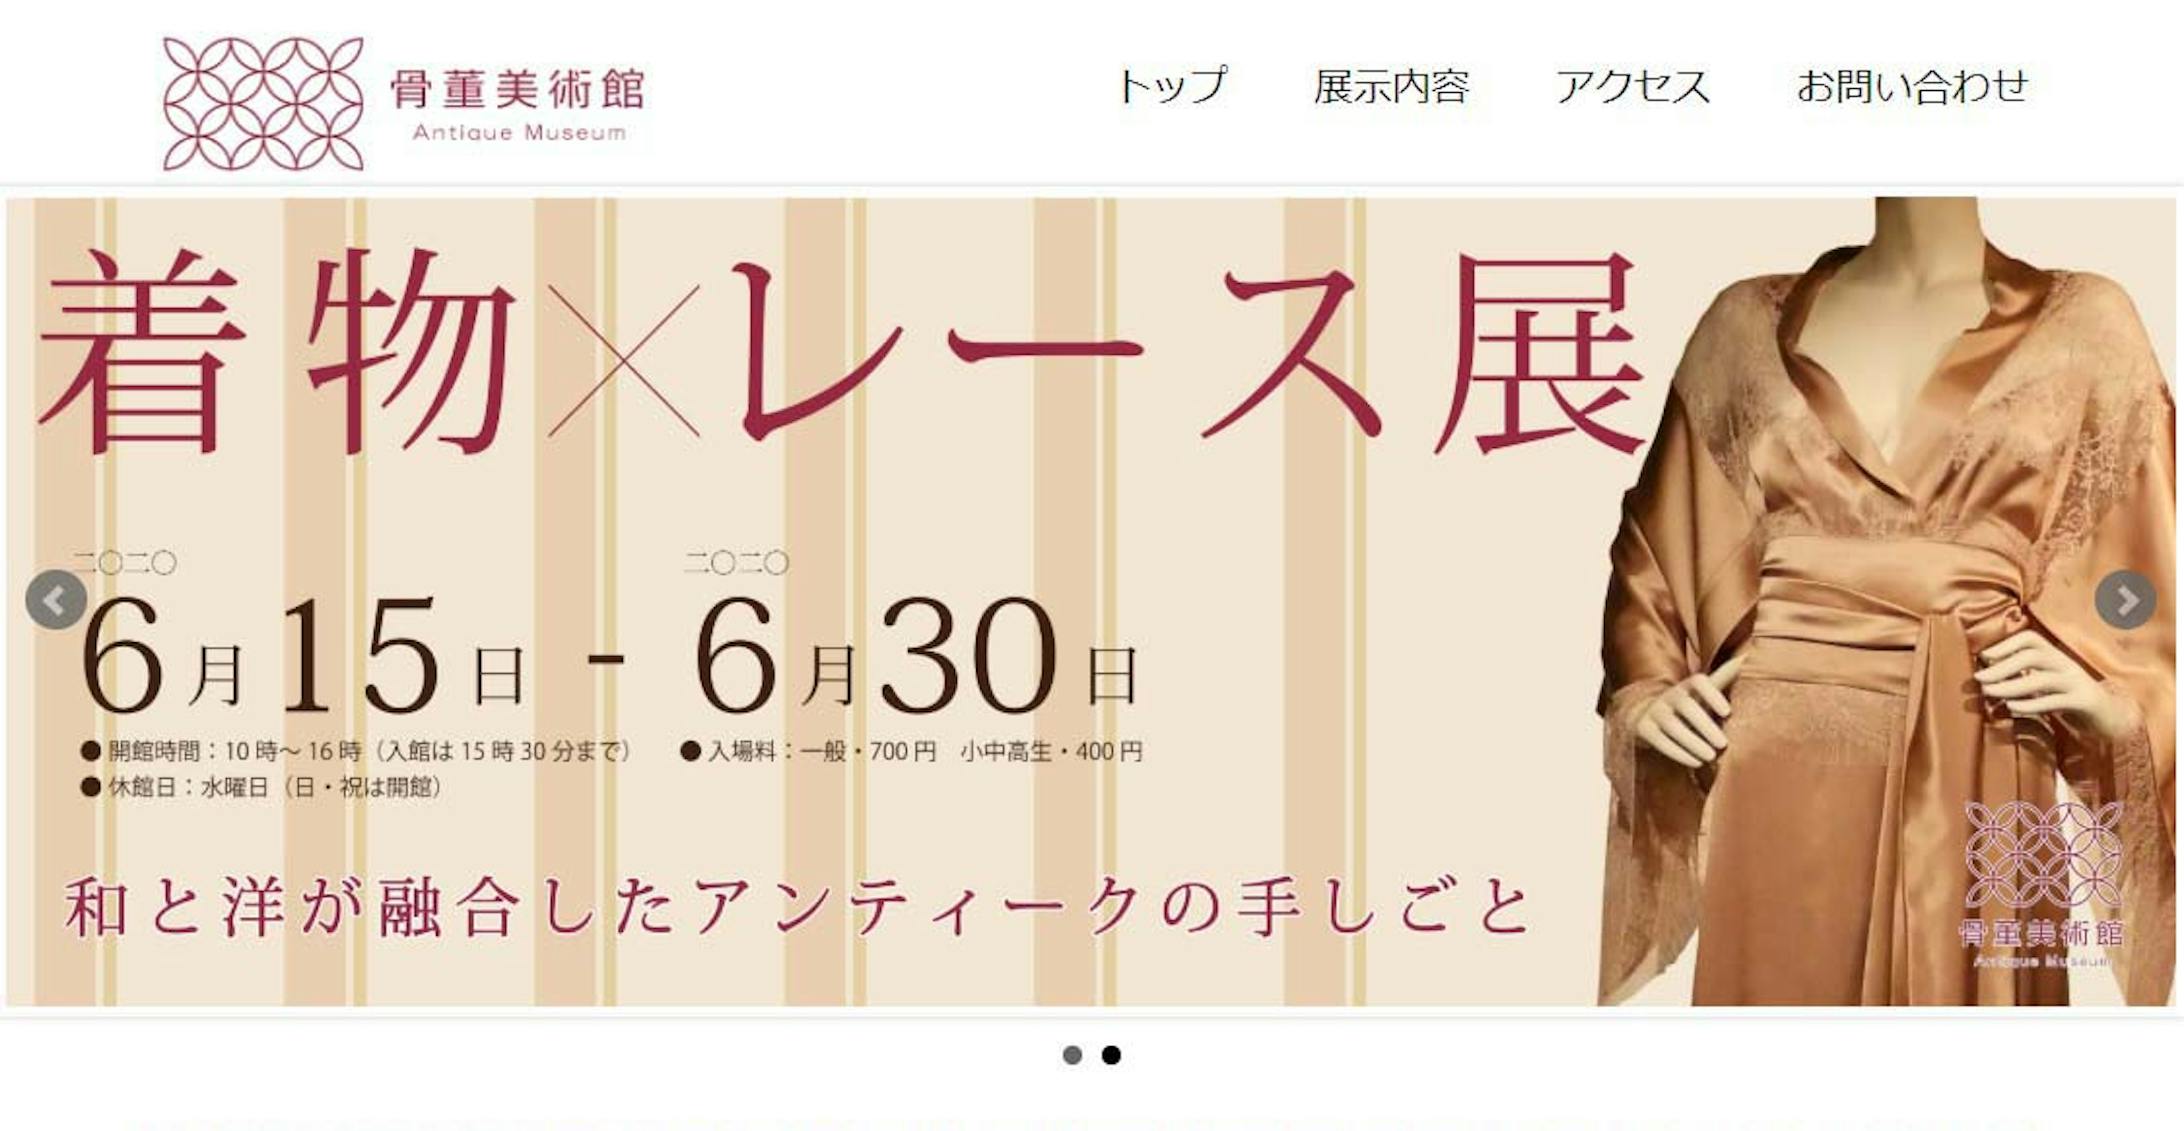 kimono & lace exhibition (web)-2